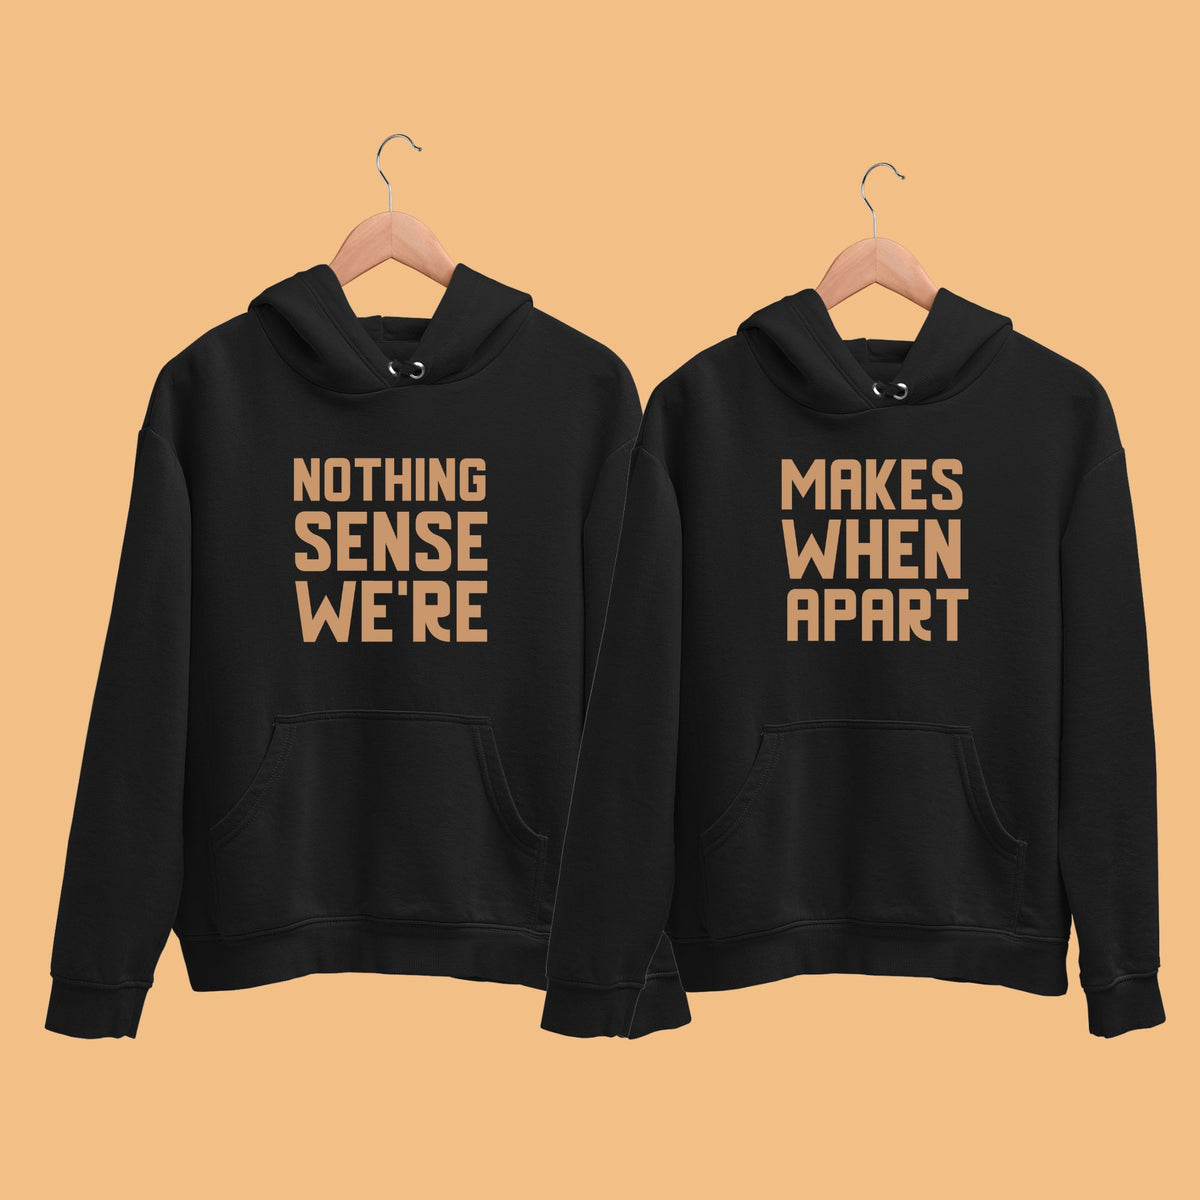 otton-printed-couple-hoodie-s-black-nothing-sense-we-are-gogirgit-com  #color_black